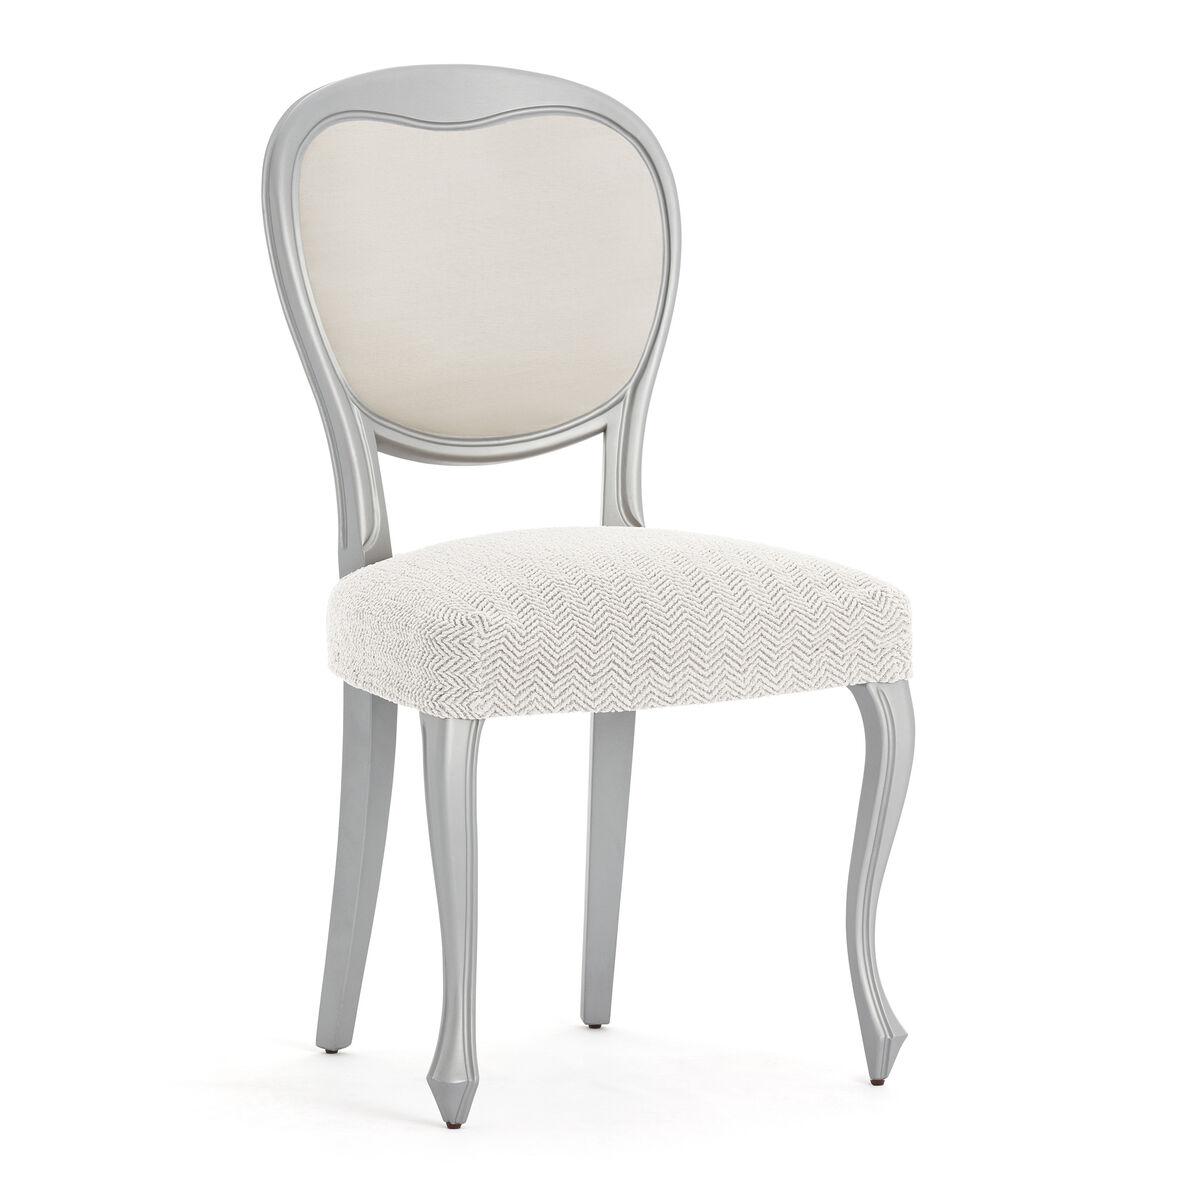 Chair Cover Eysa JAZ Soft green 50 x 5 x 50 cm 2 Units